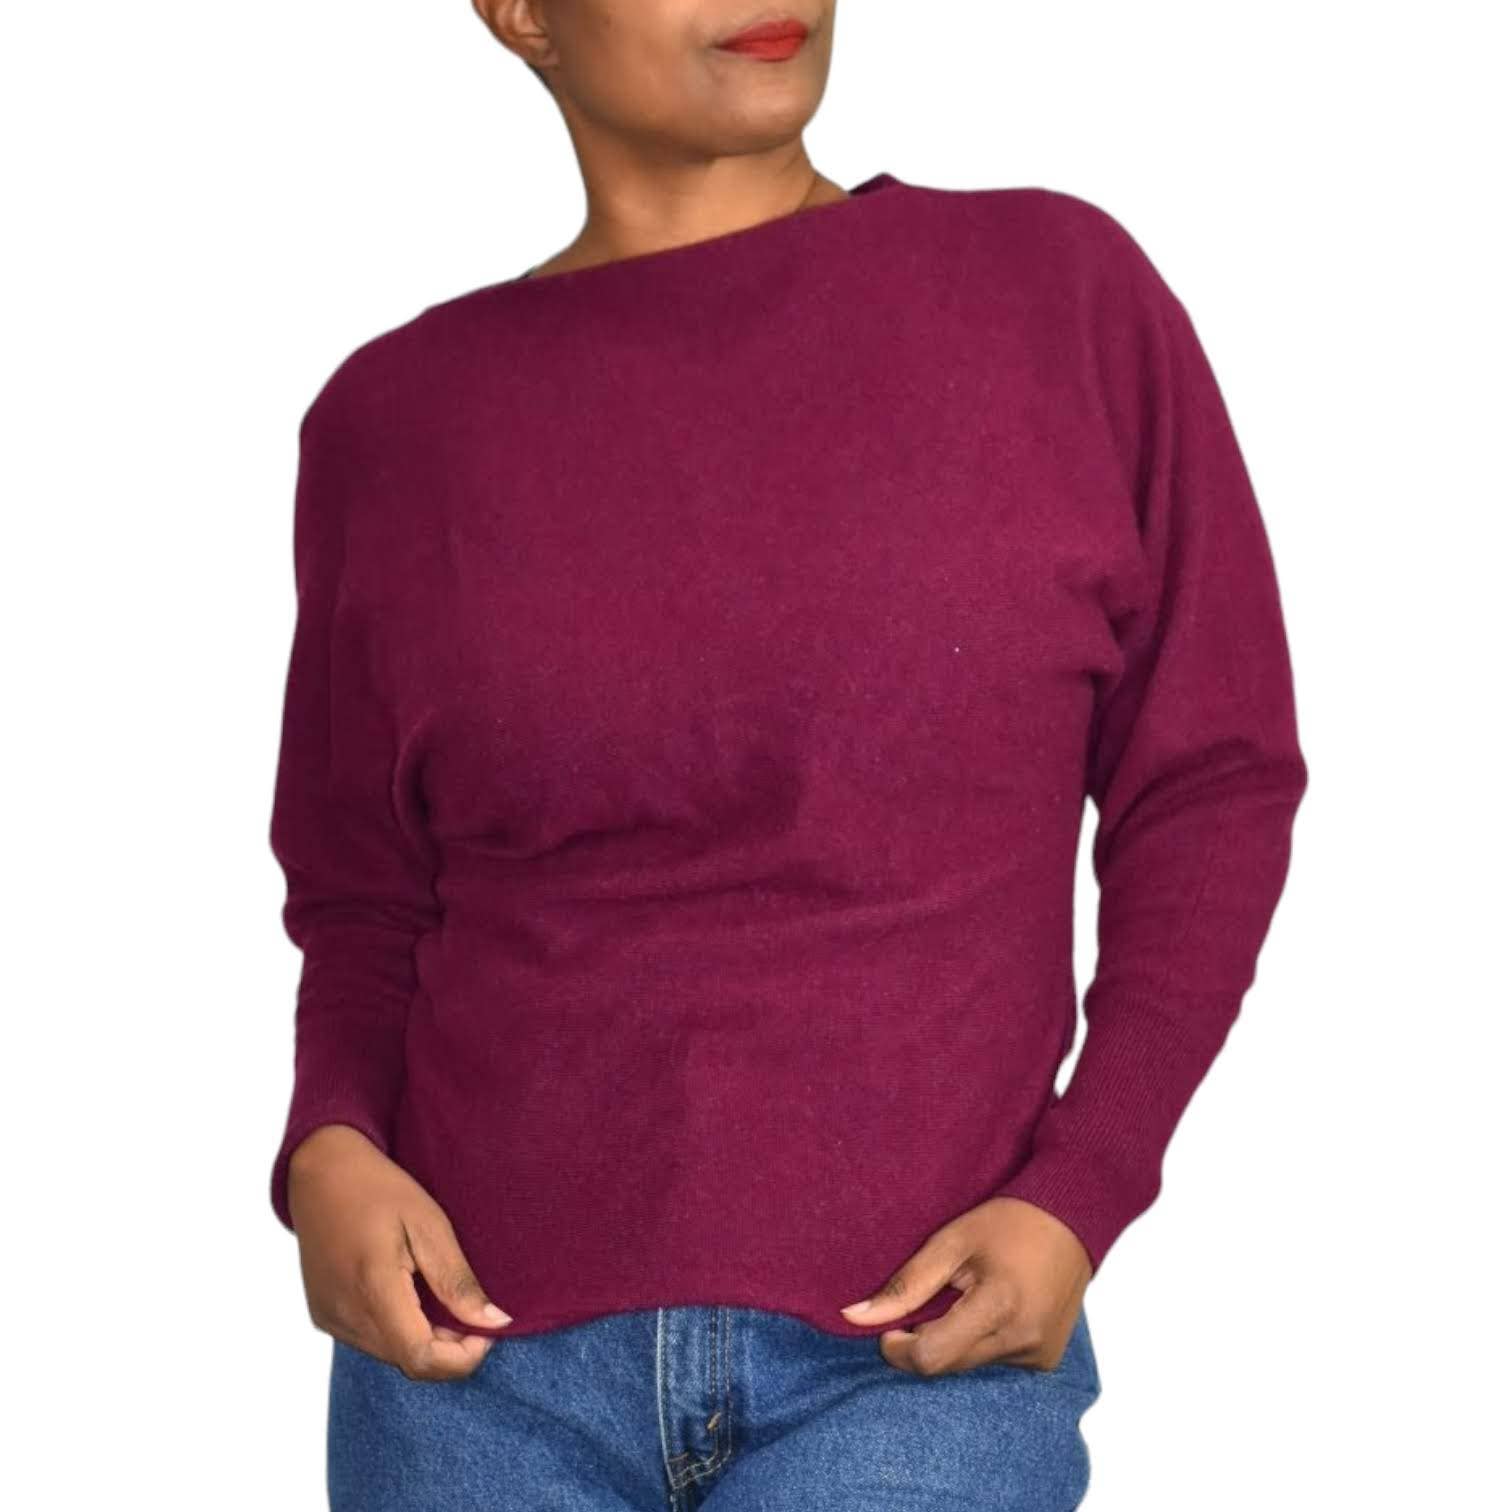 Club Monaco Cashmere Pullover Sweater Magenta Purple Keyhole Back Bow Dolman Sleeve Size Small